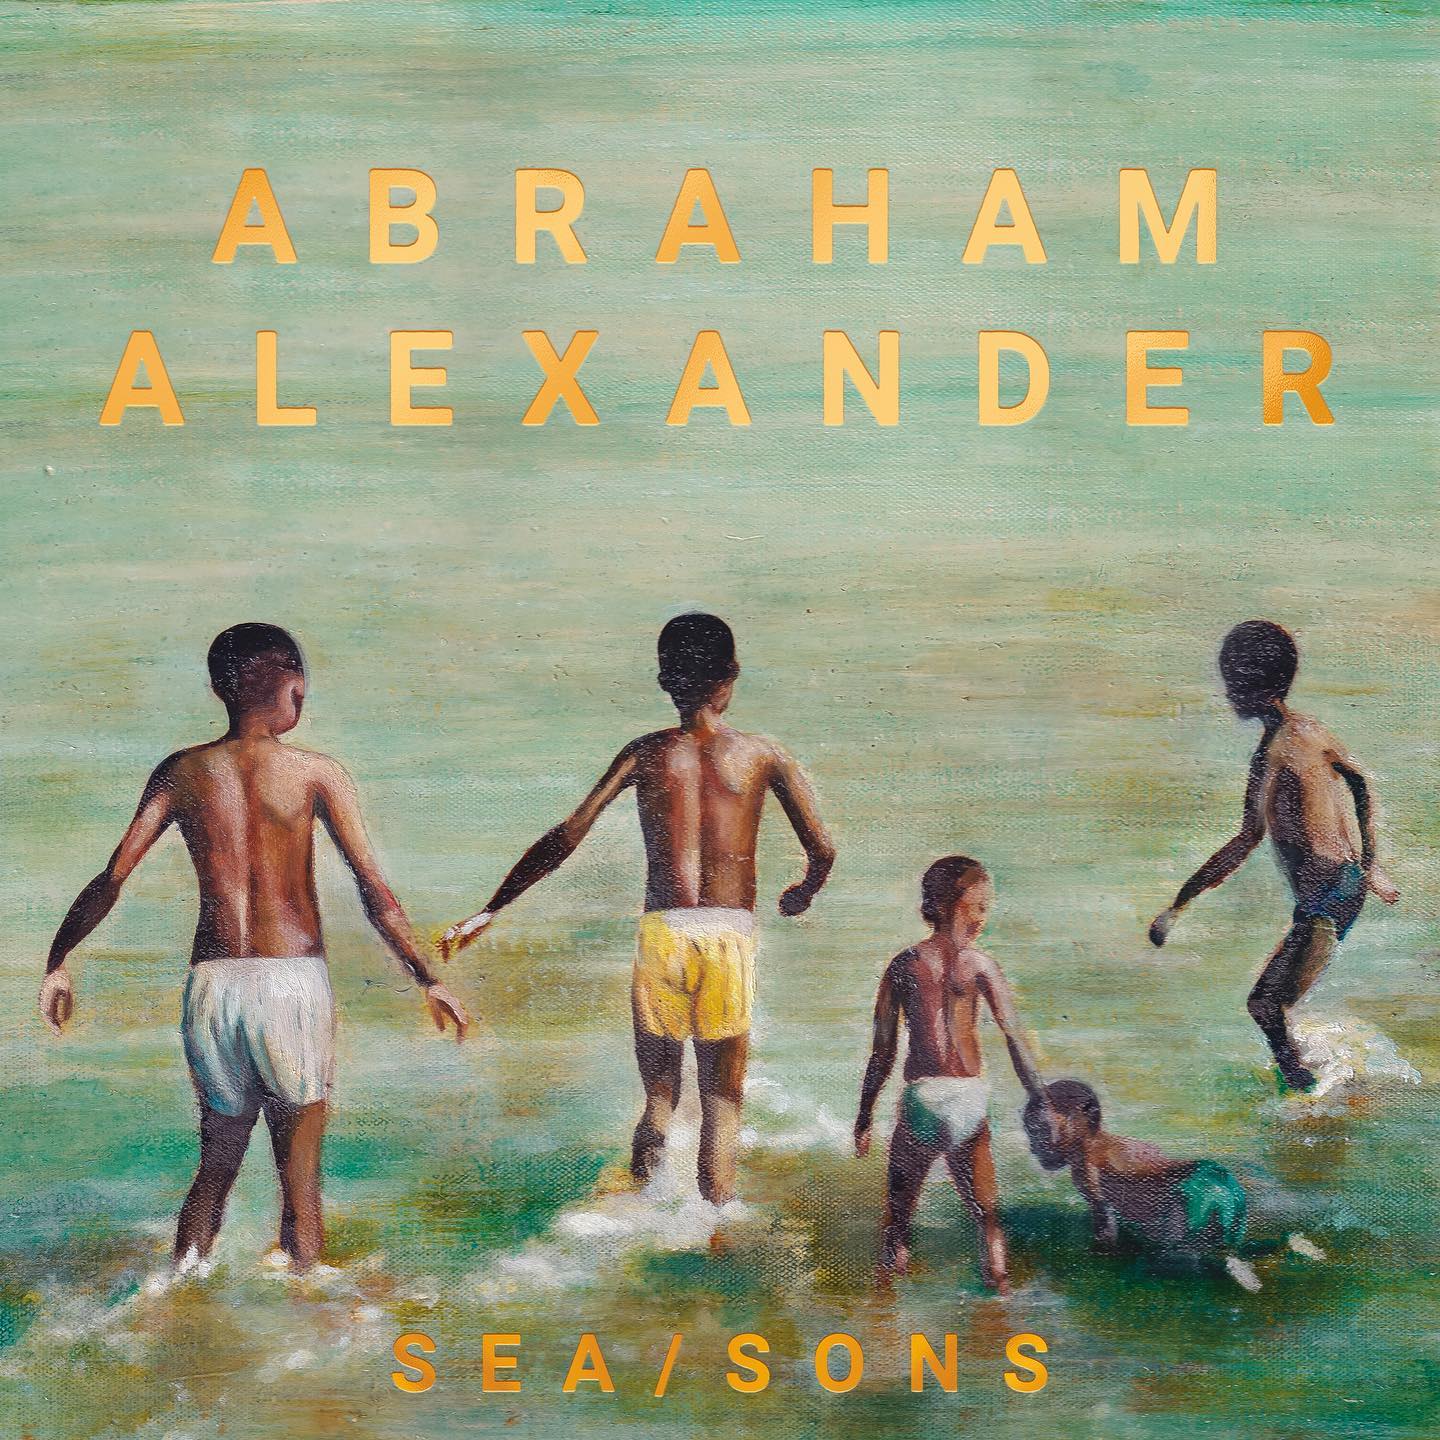 Download: Abraham Alexander – Bella Dawn MP3 Latest Songs